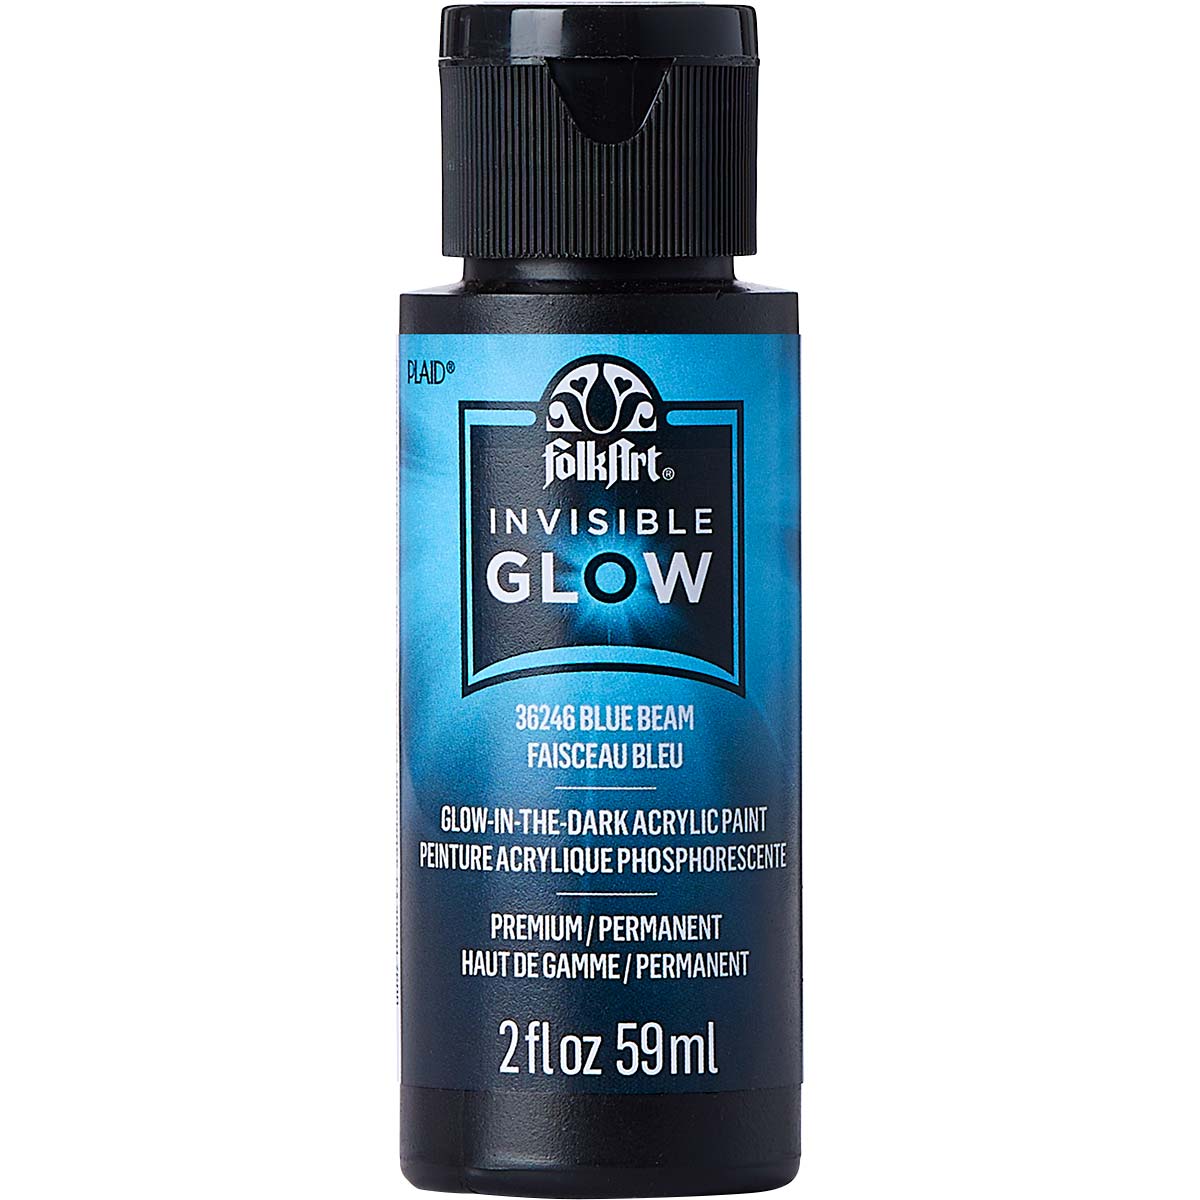 Pentart Glow in the Dark Acrylic Paint Light Blue 30 ml